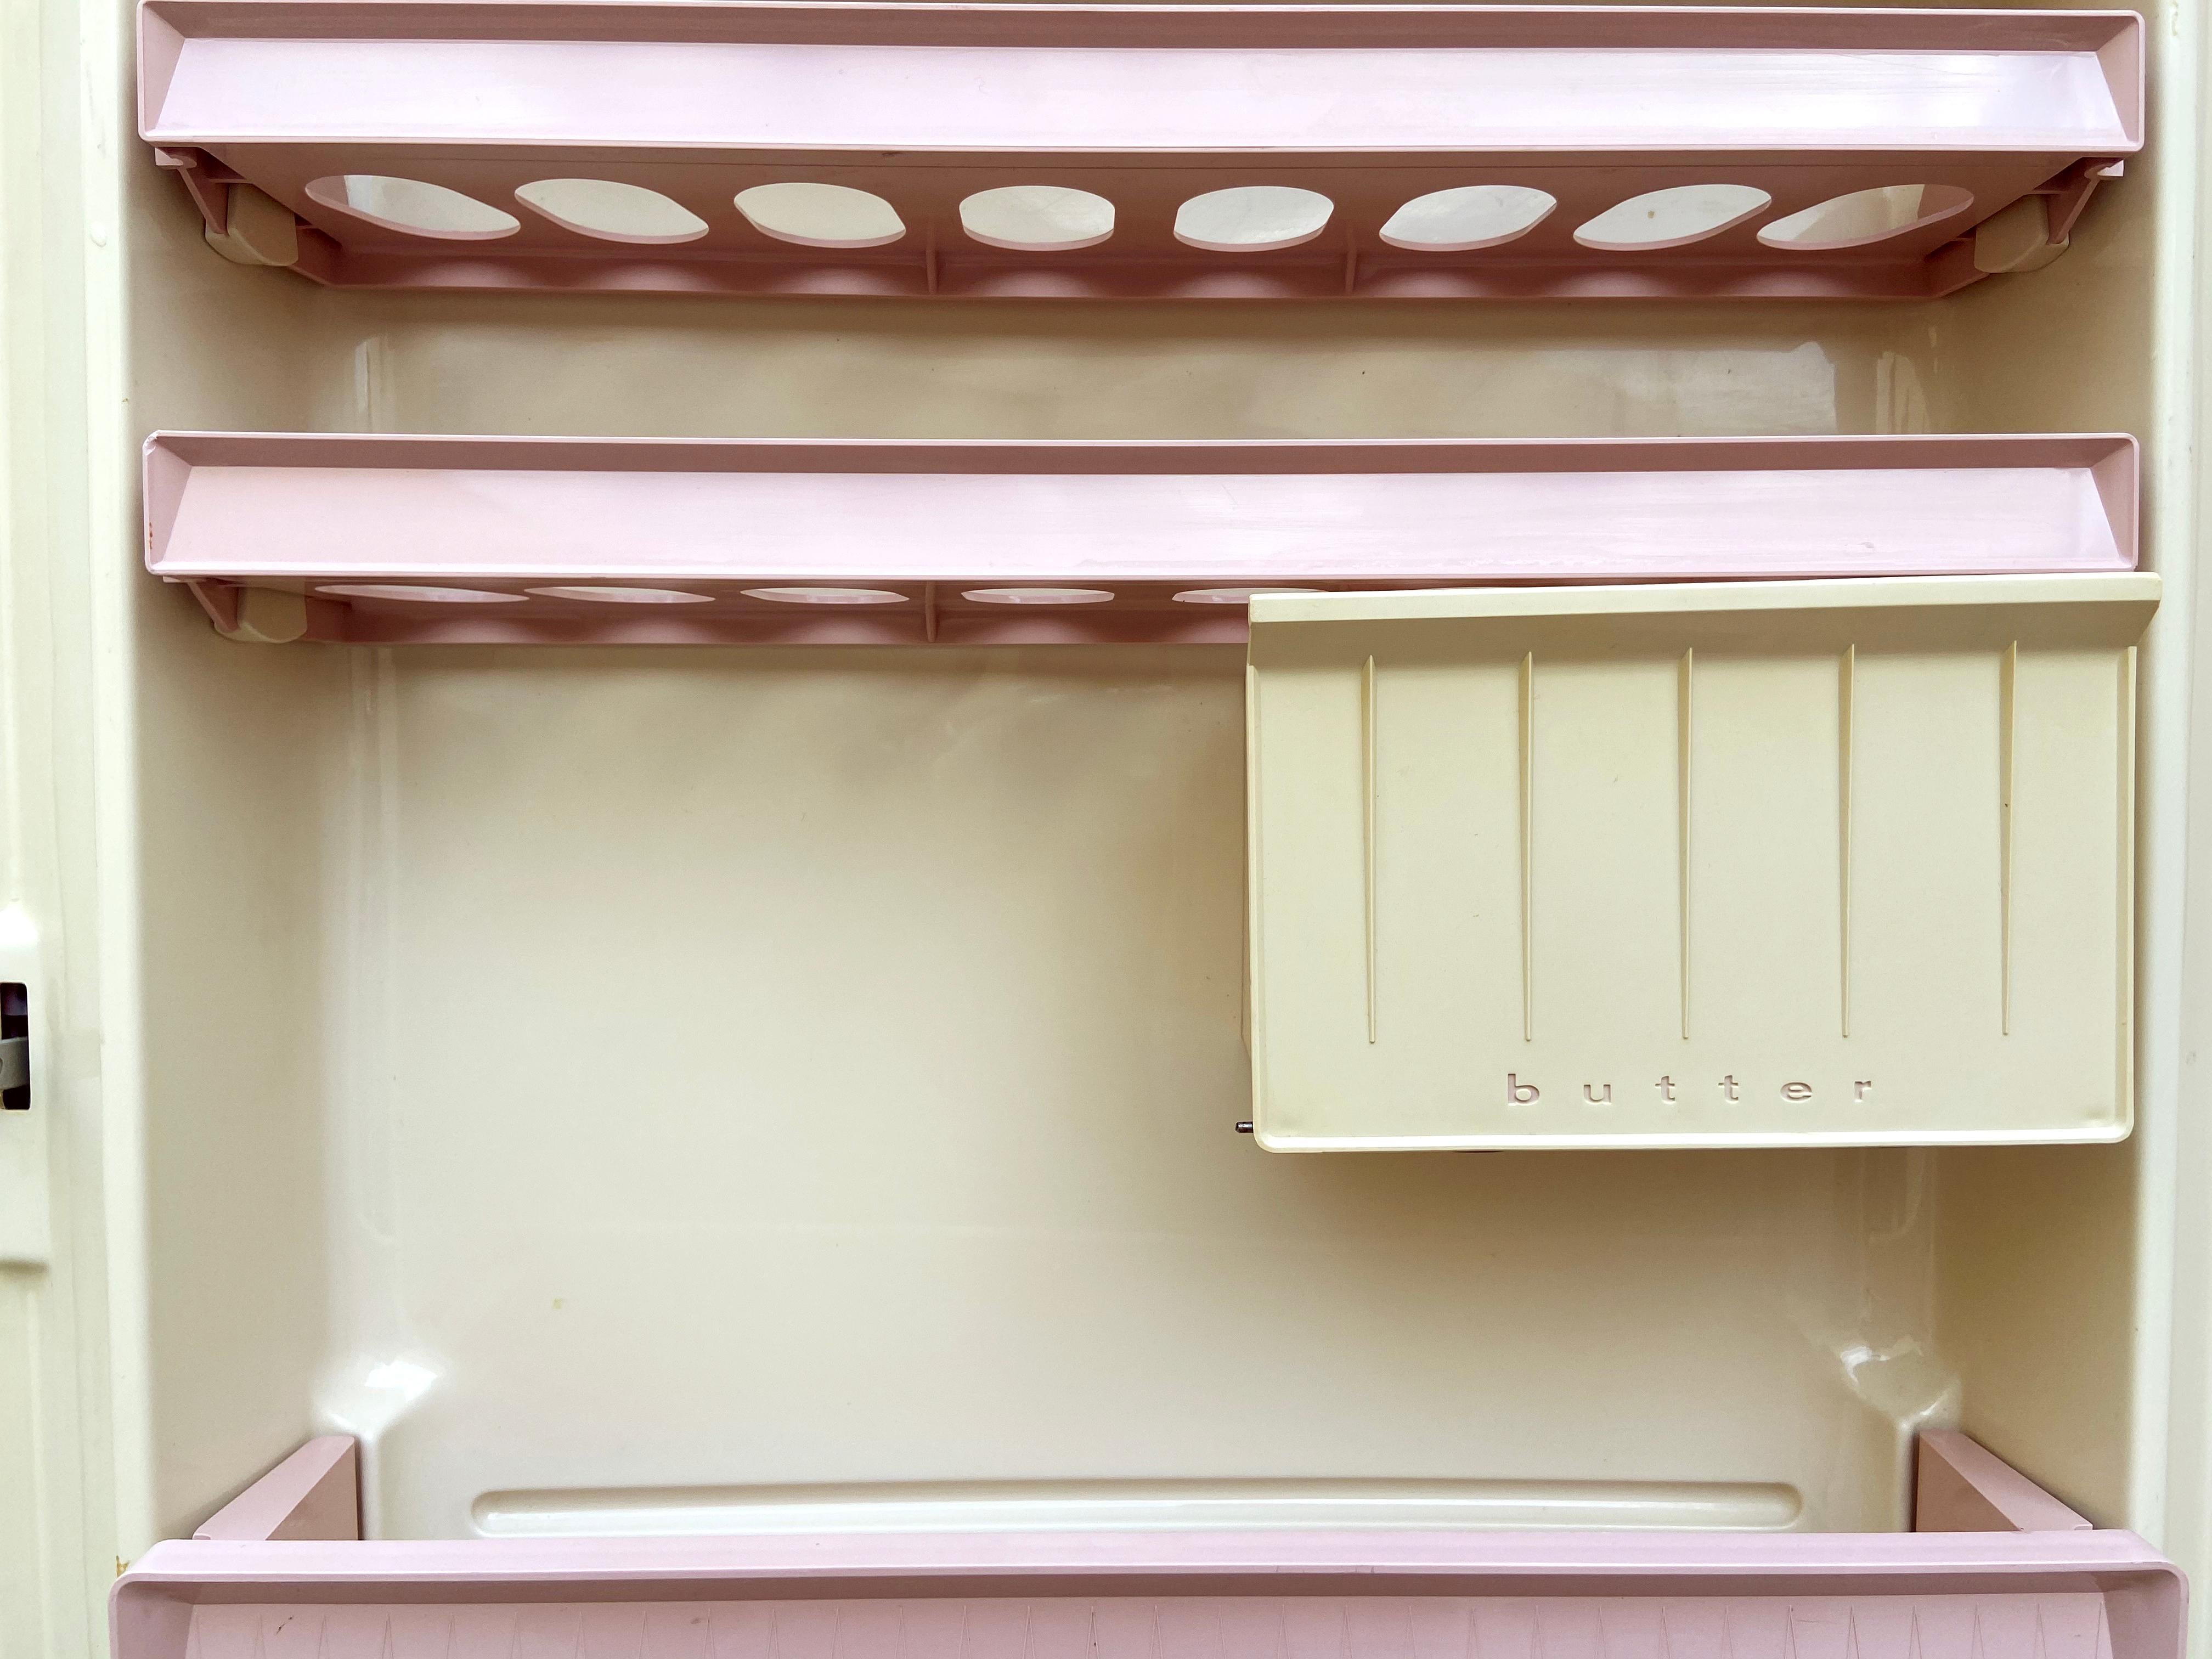 American 1950s Pink Fridgedaire Refrigerator